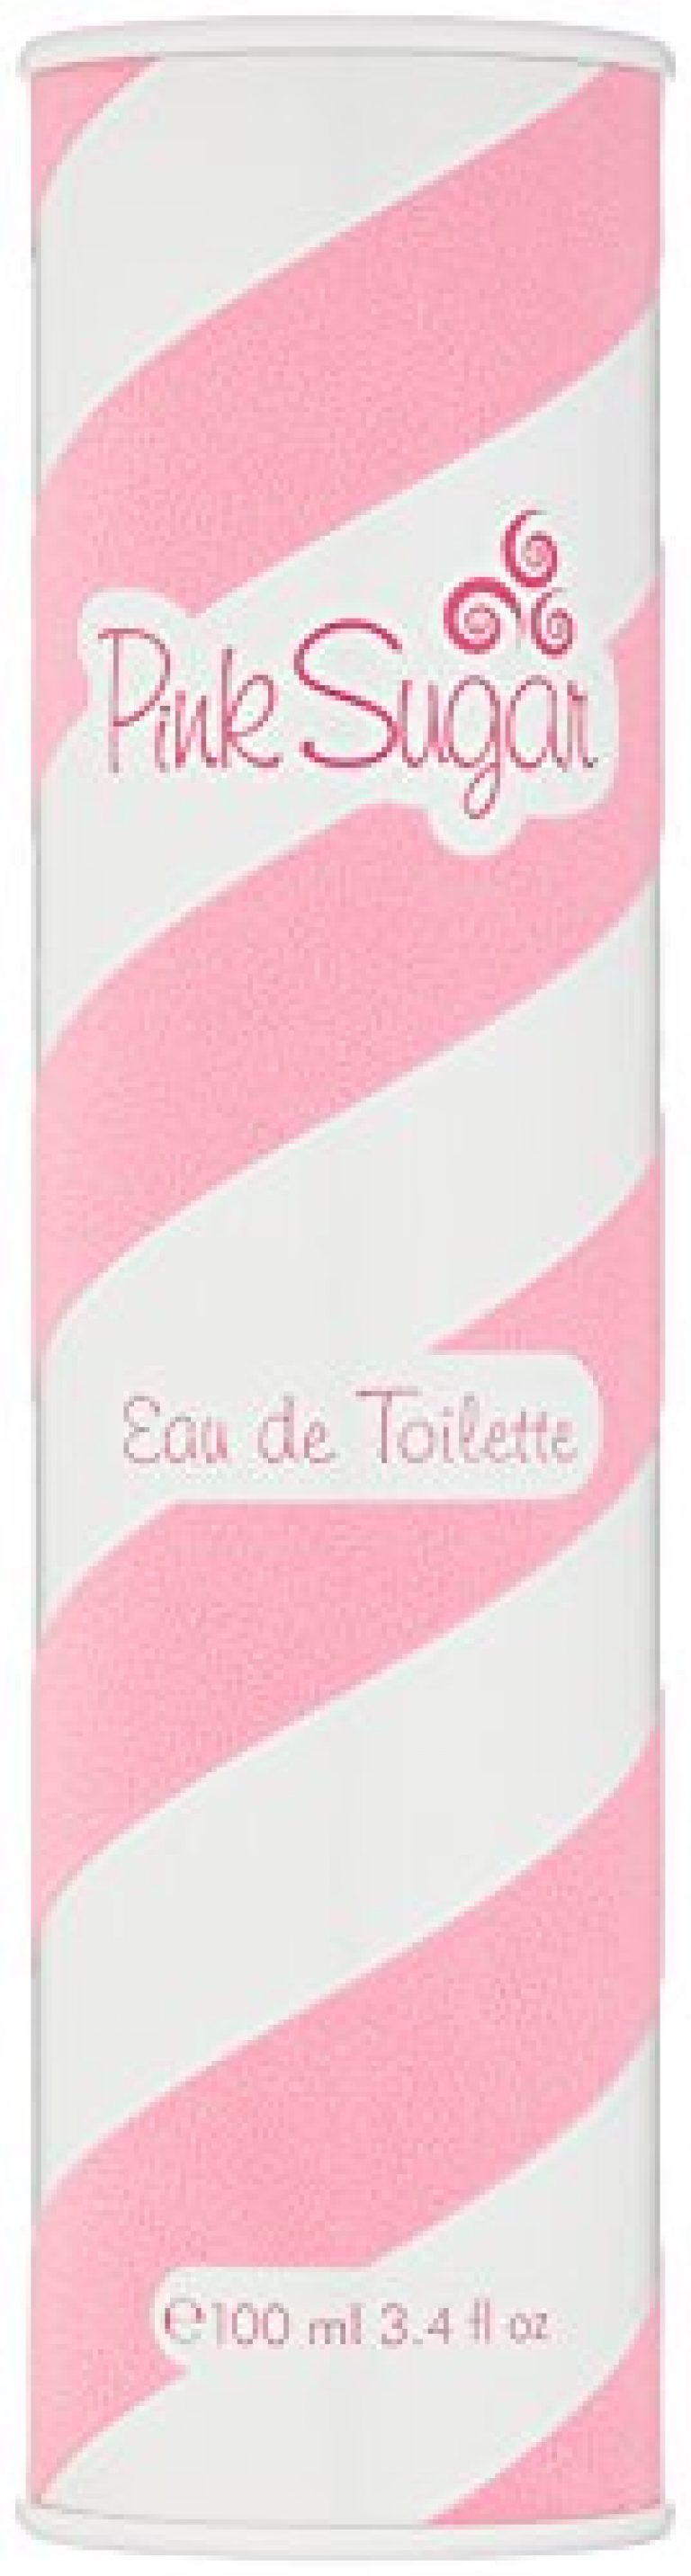 Pink Sugar Eau de Toilette Perfume for Women, 3.4 Fl. Oz. 2